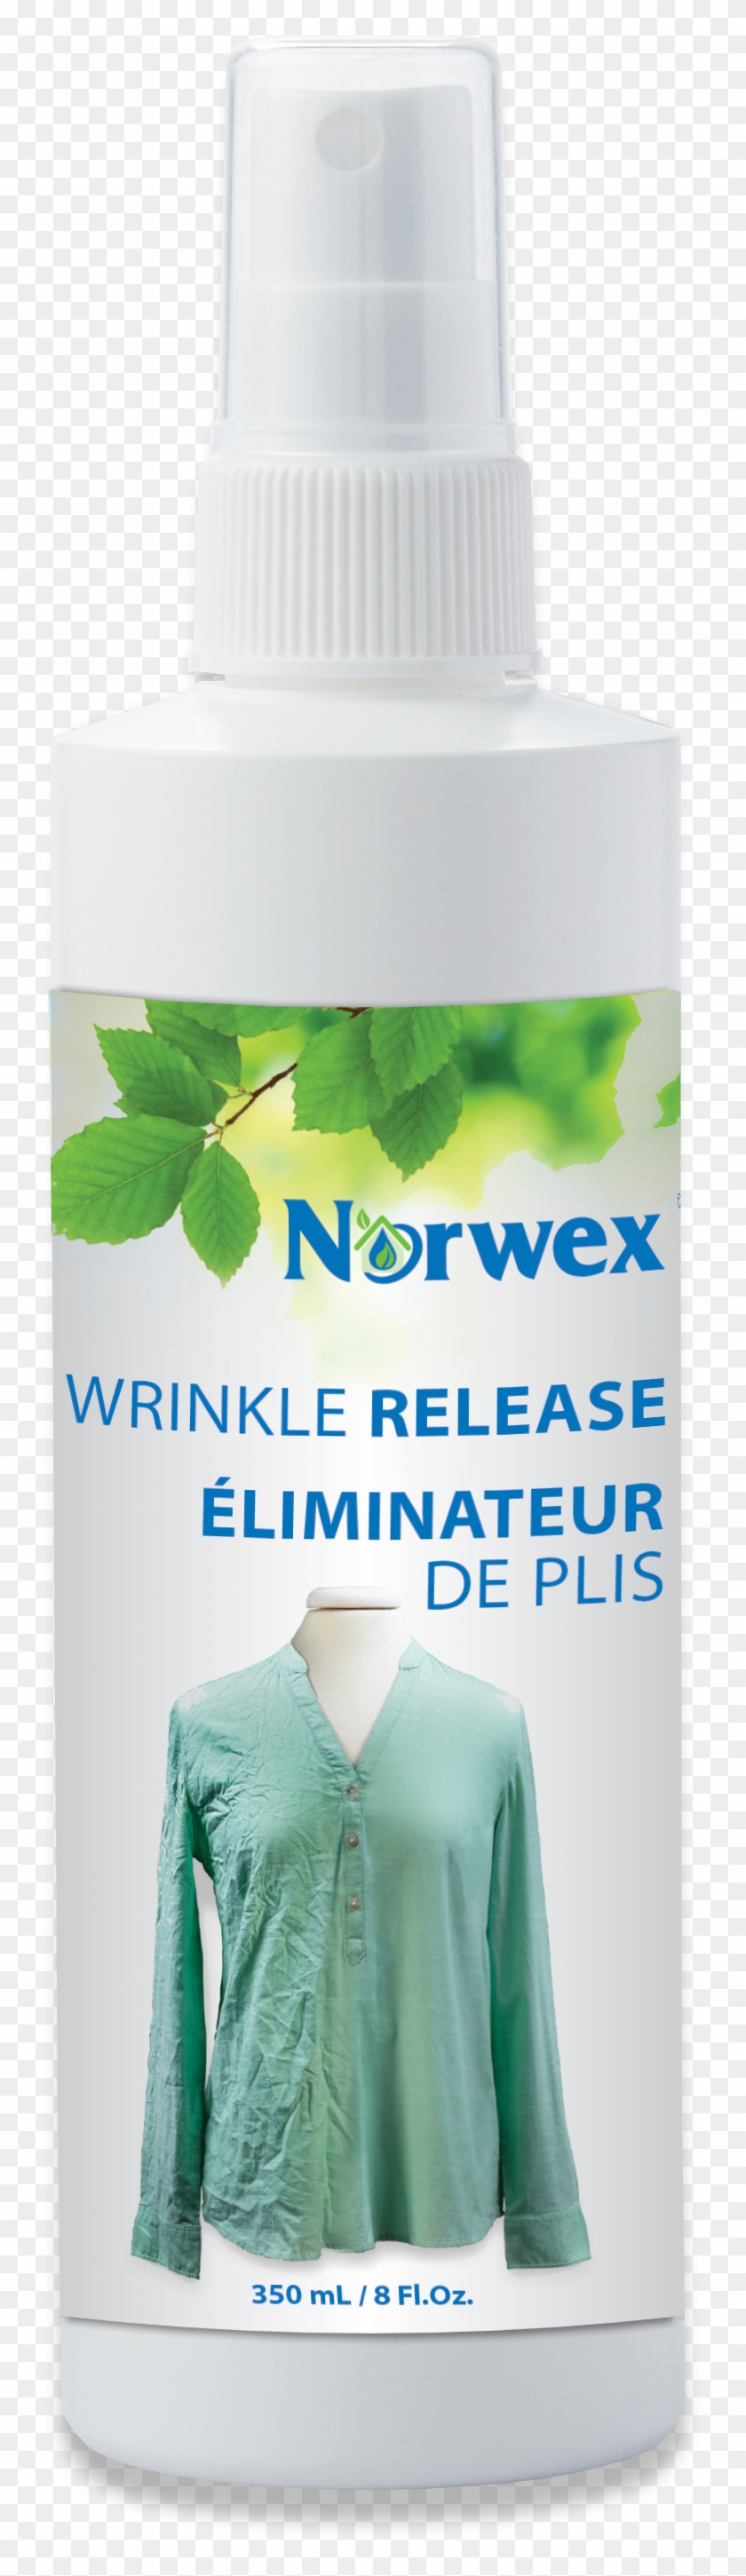 Norwex Wrinkle Relea - Norwex Wrinkle Release Clipart #4107090